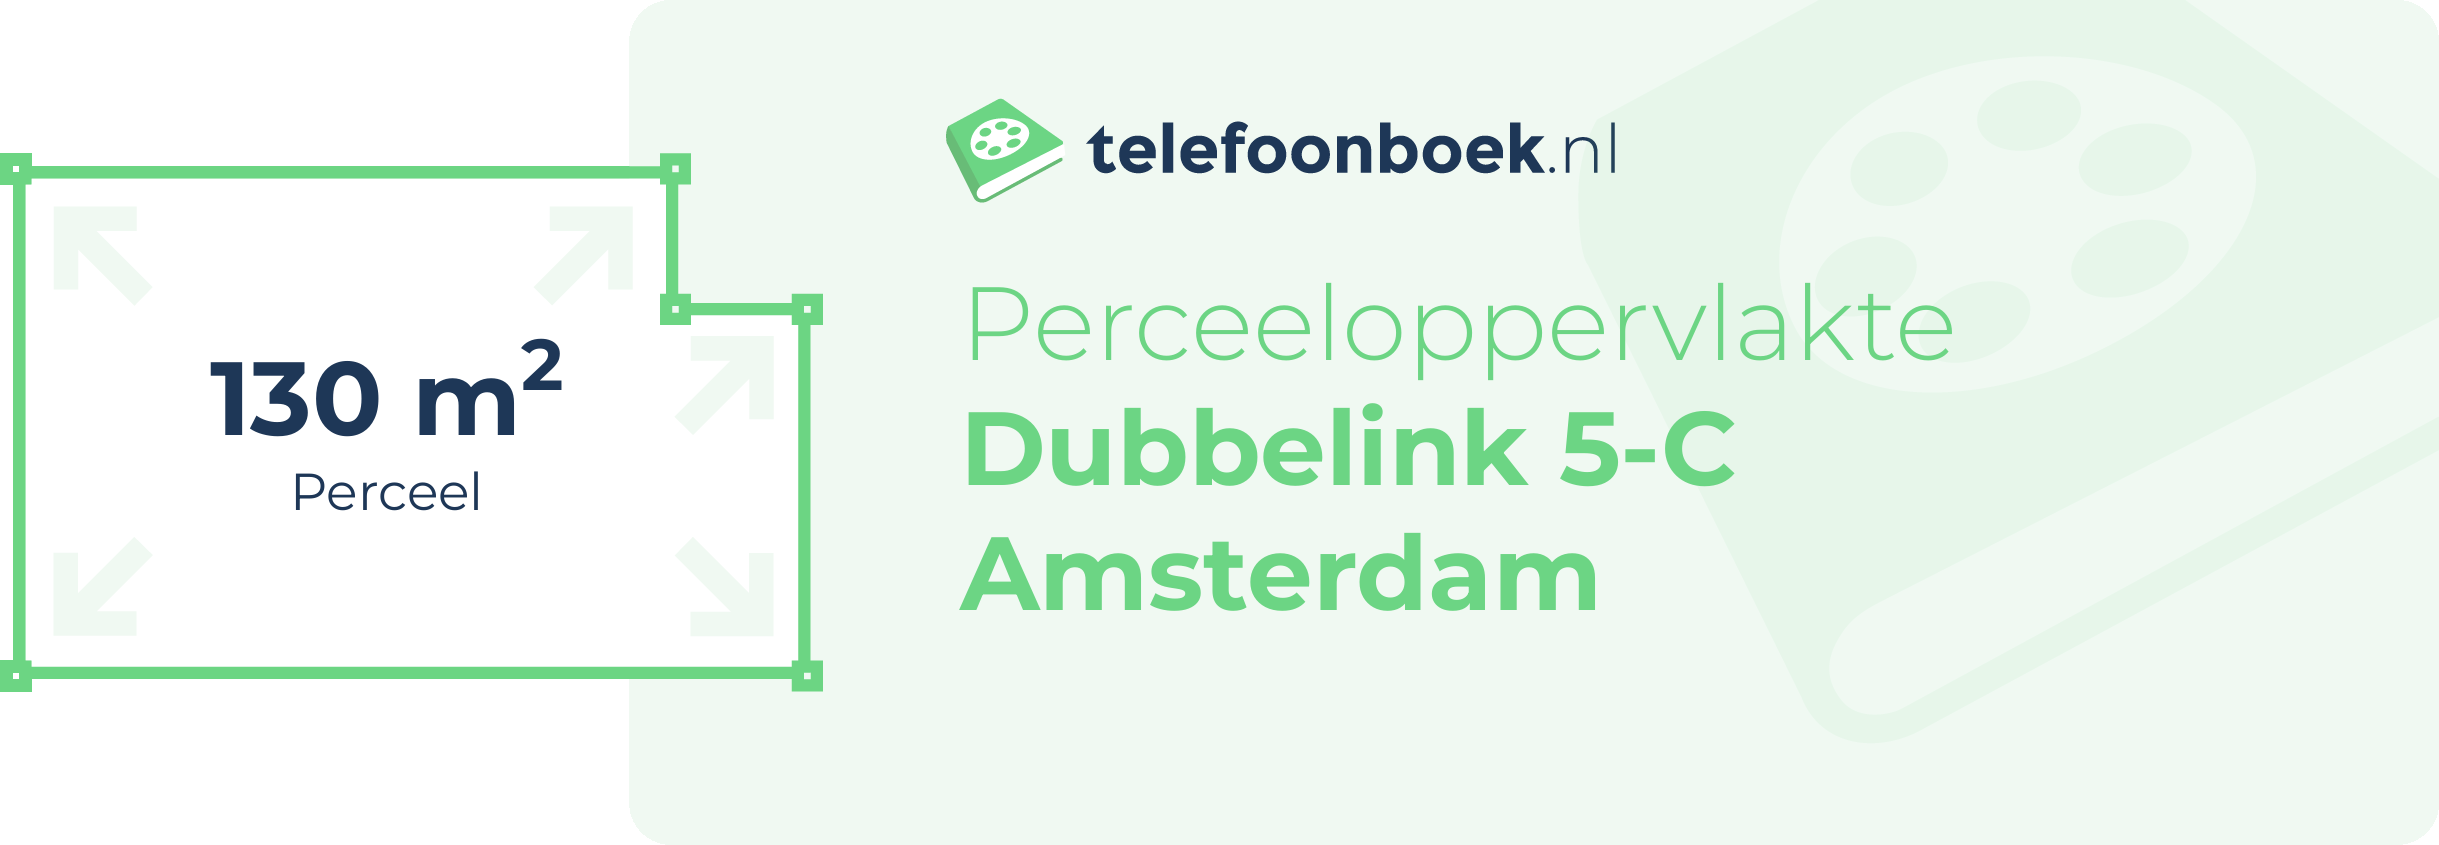 Perceeloppervlakte Dubbelink 5-C Amsterdam